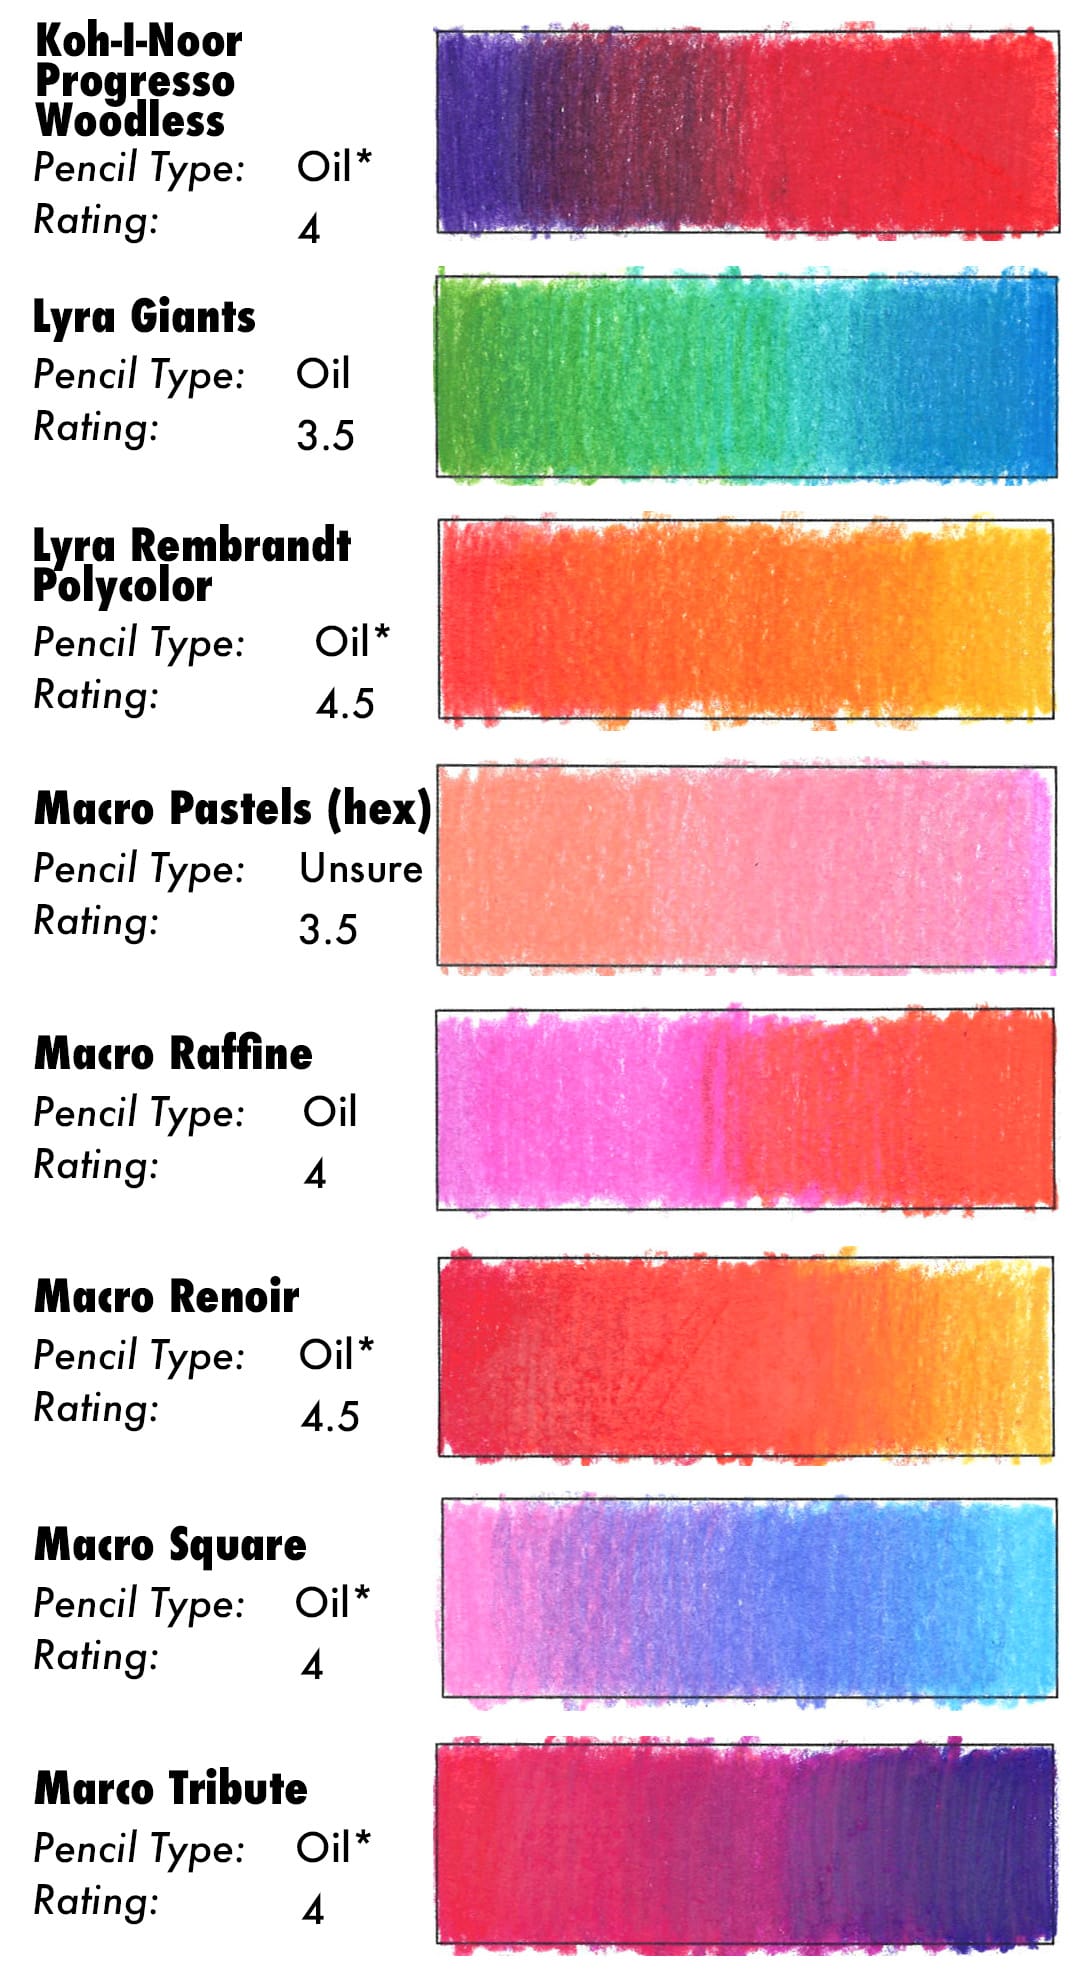 Colored Pencil Blending Results for Koh-I-Noor Progresso Woodless, Lyra Giants, Lyra Rembrandt Polycolor, Macro Pastels (Hex), Macro Raffine, Macro Renoir, Macro Square, and Macro Tribute.